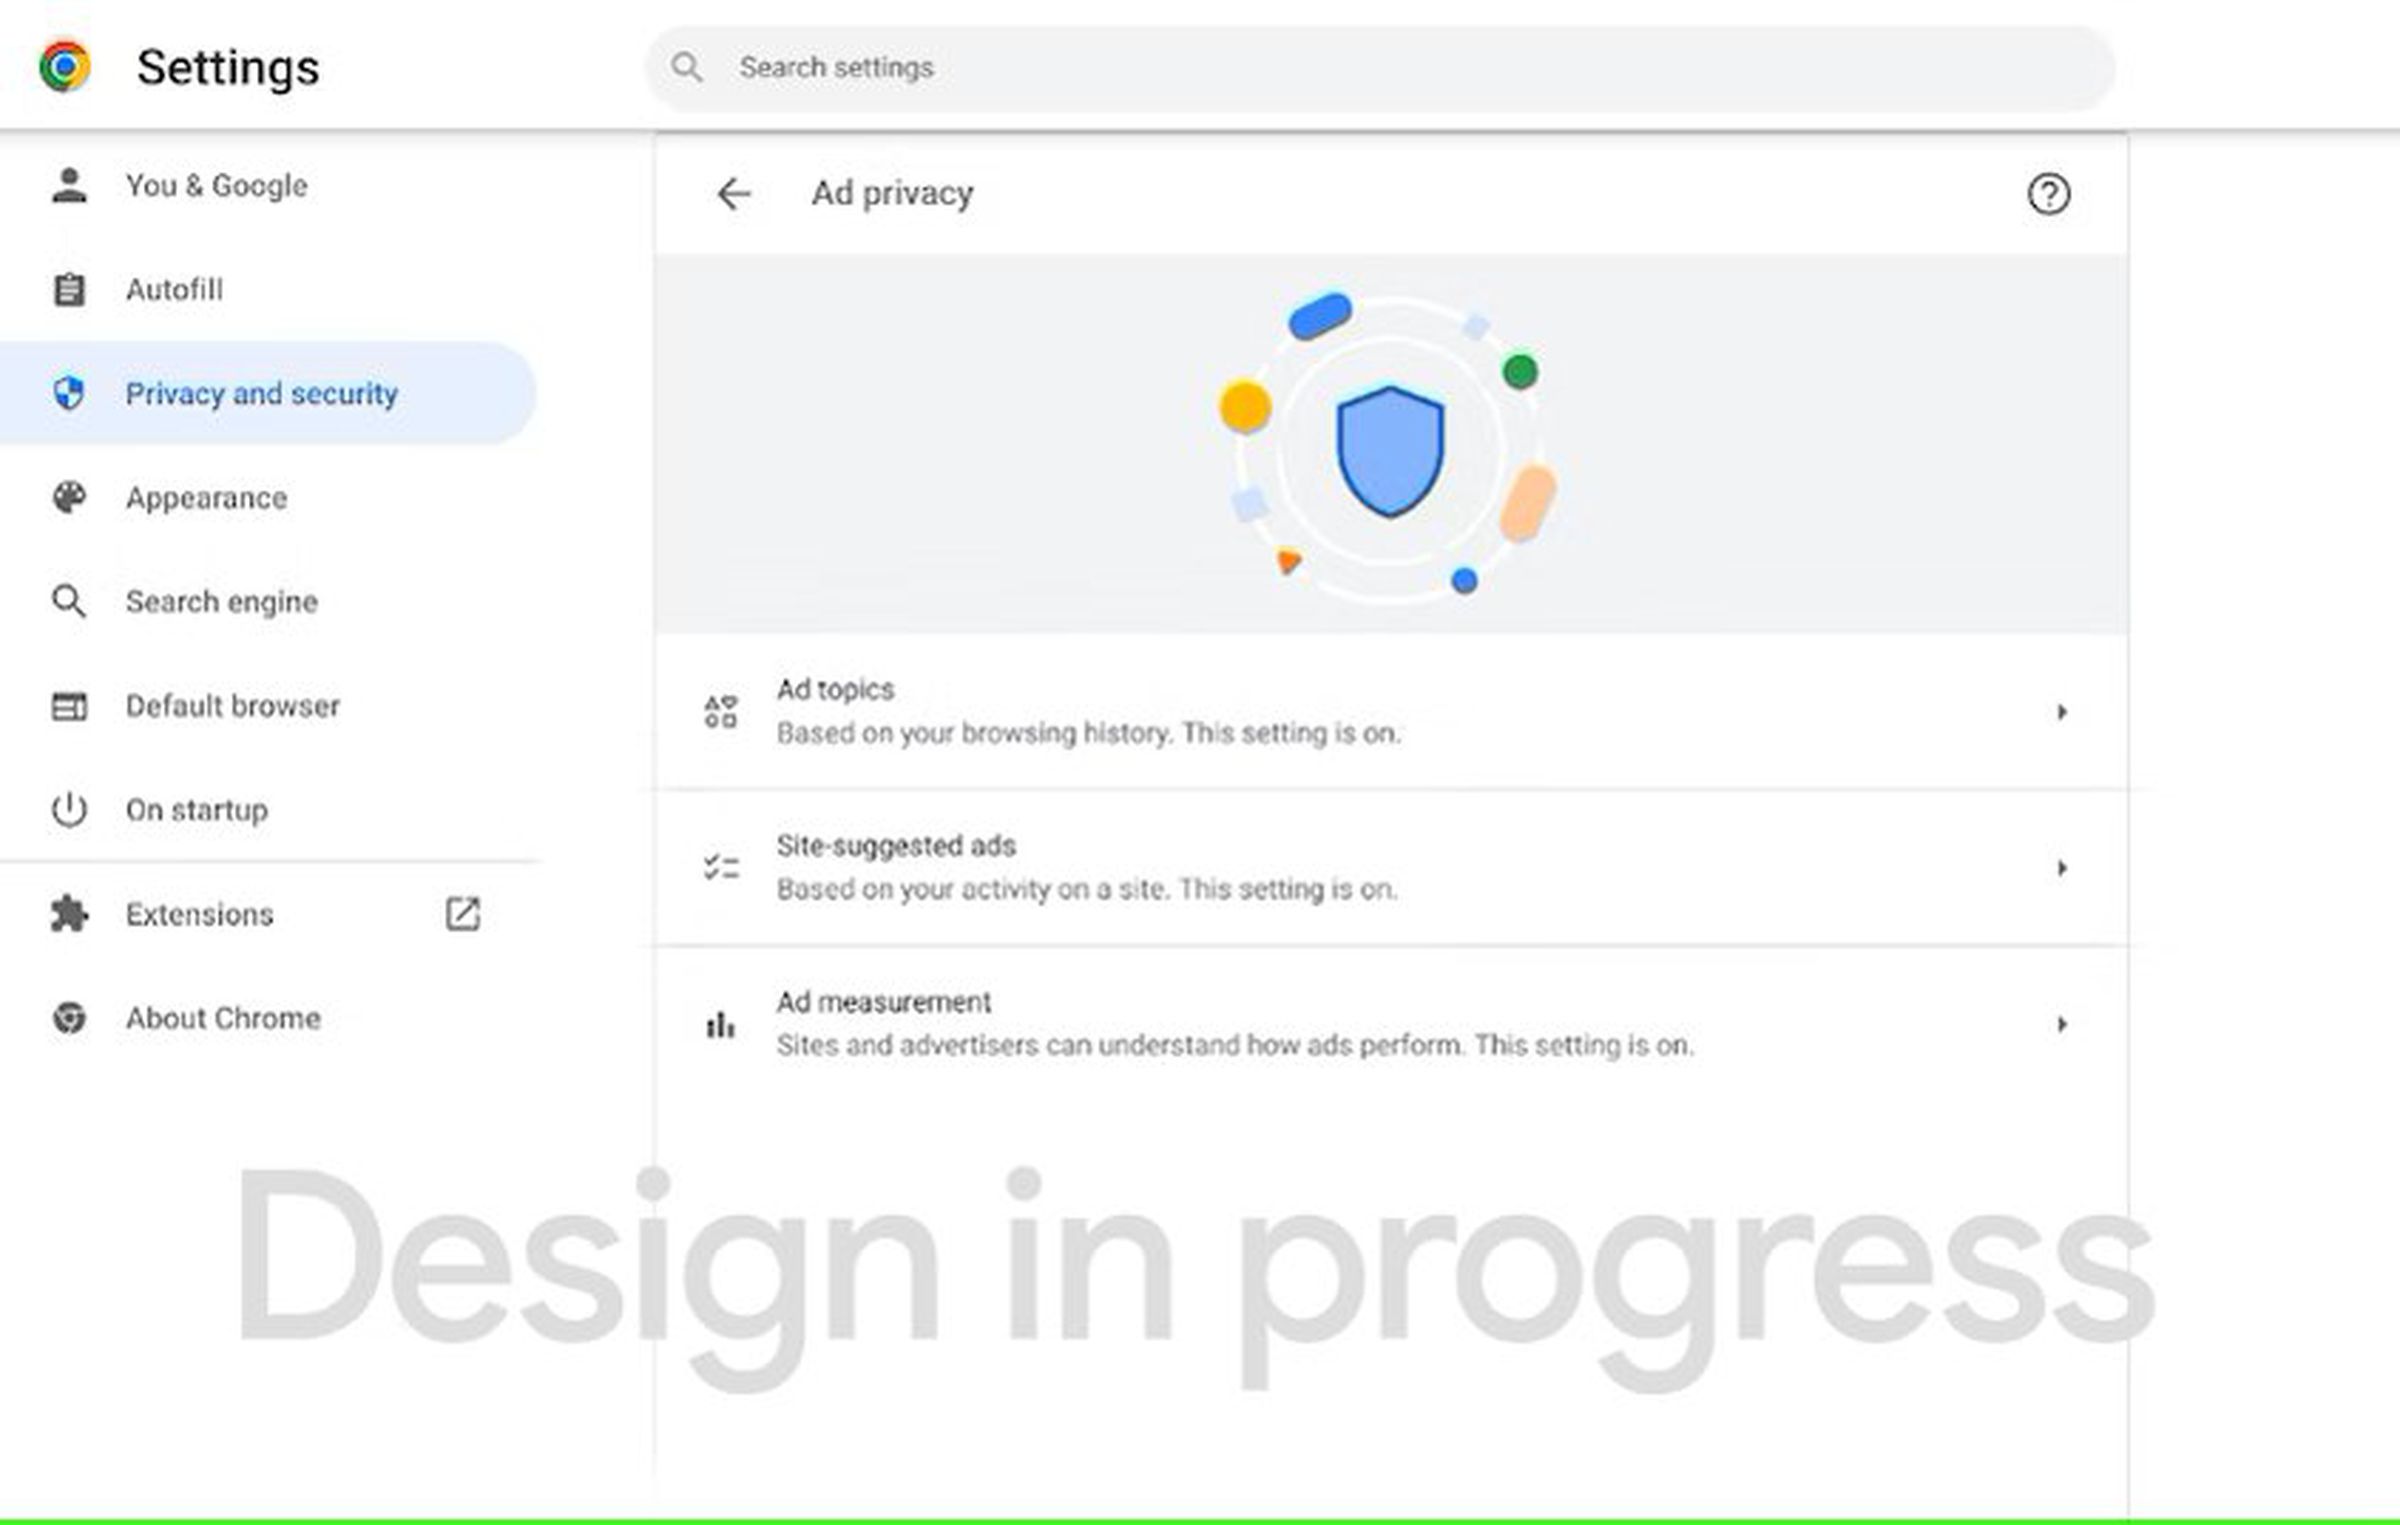 Chrome “Design in progress” screenshot of privacy settings.